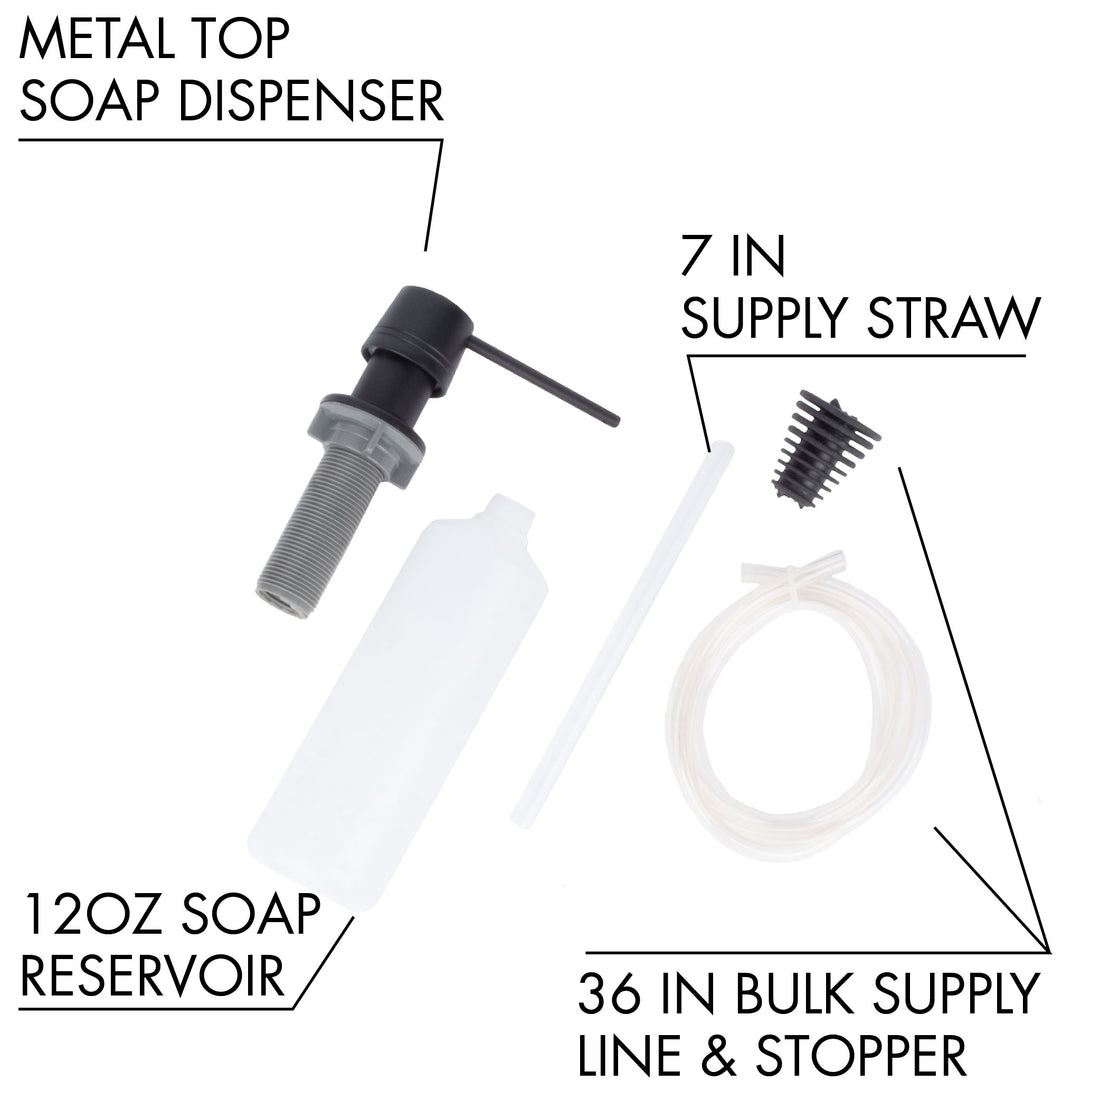 Laundry Tub Soap Dispenser (Black Finish) - Utility sinks vanites Tehila